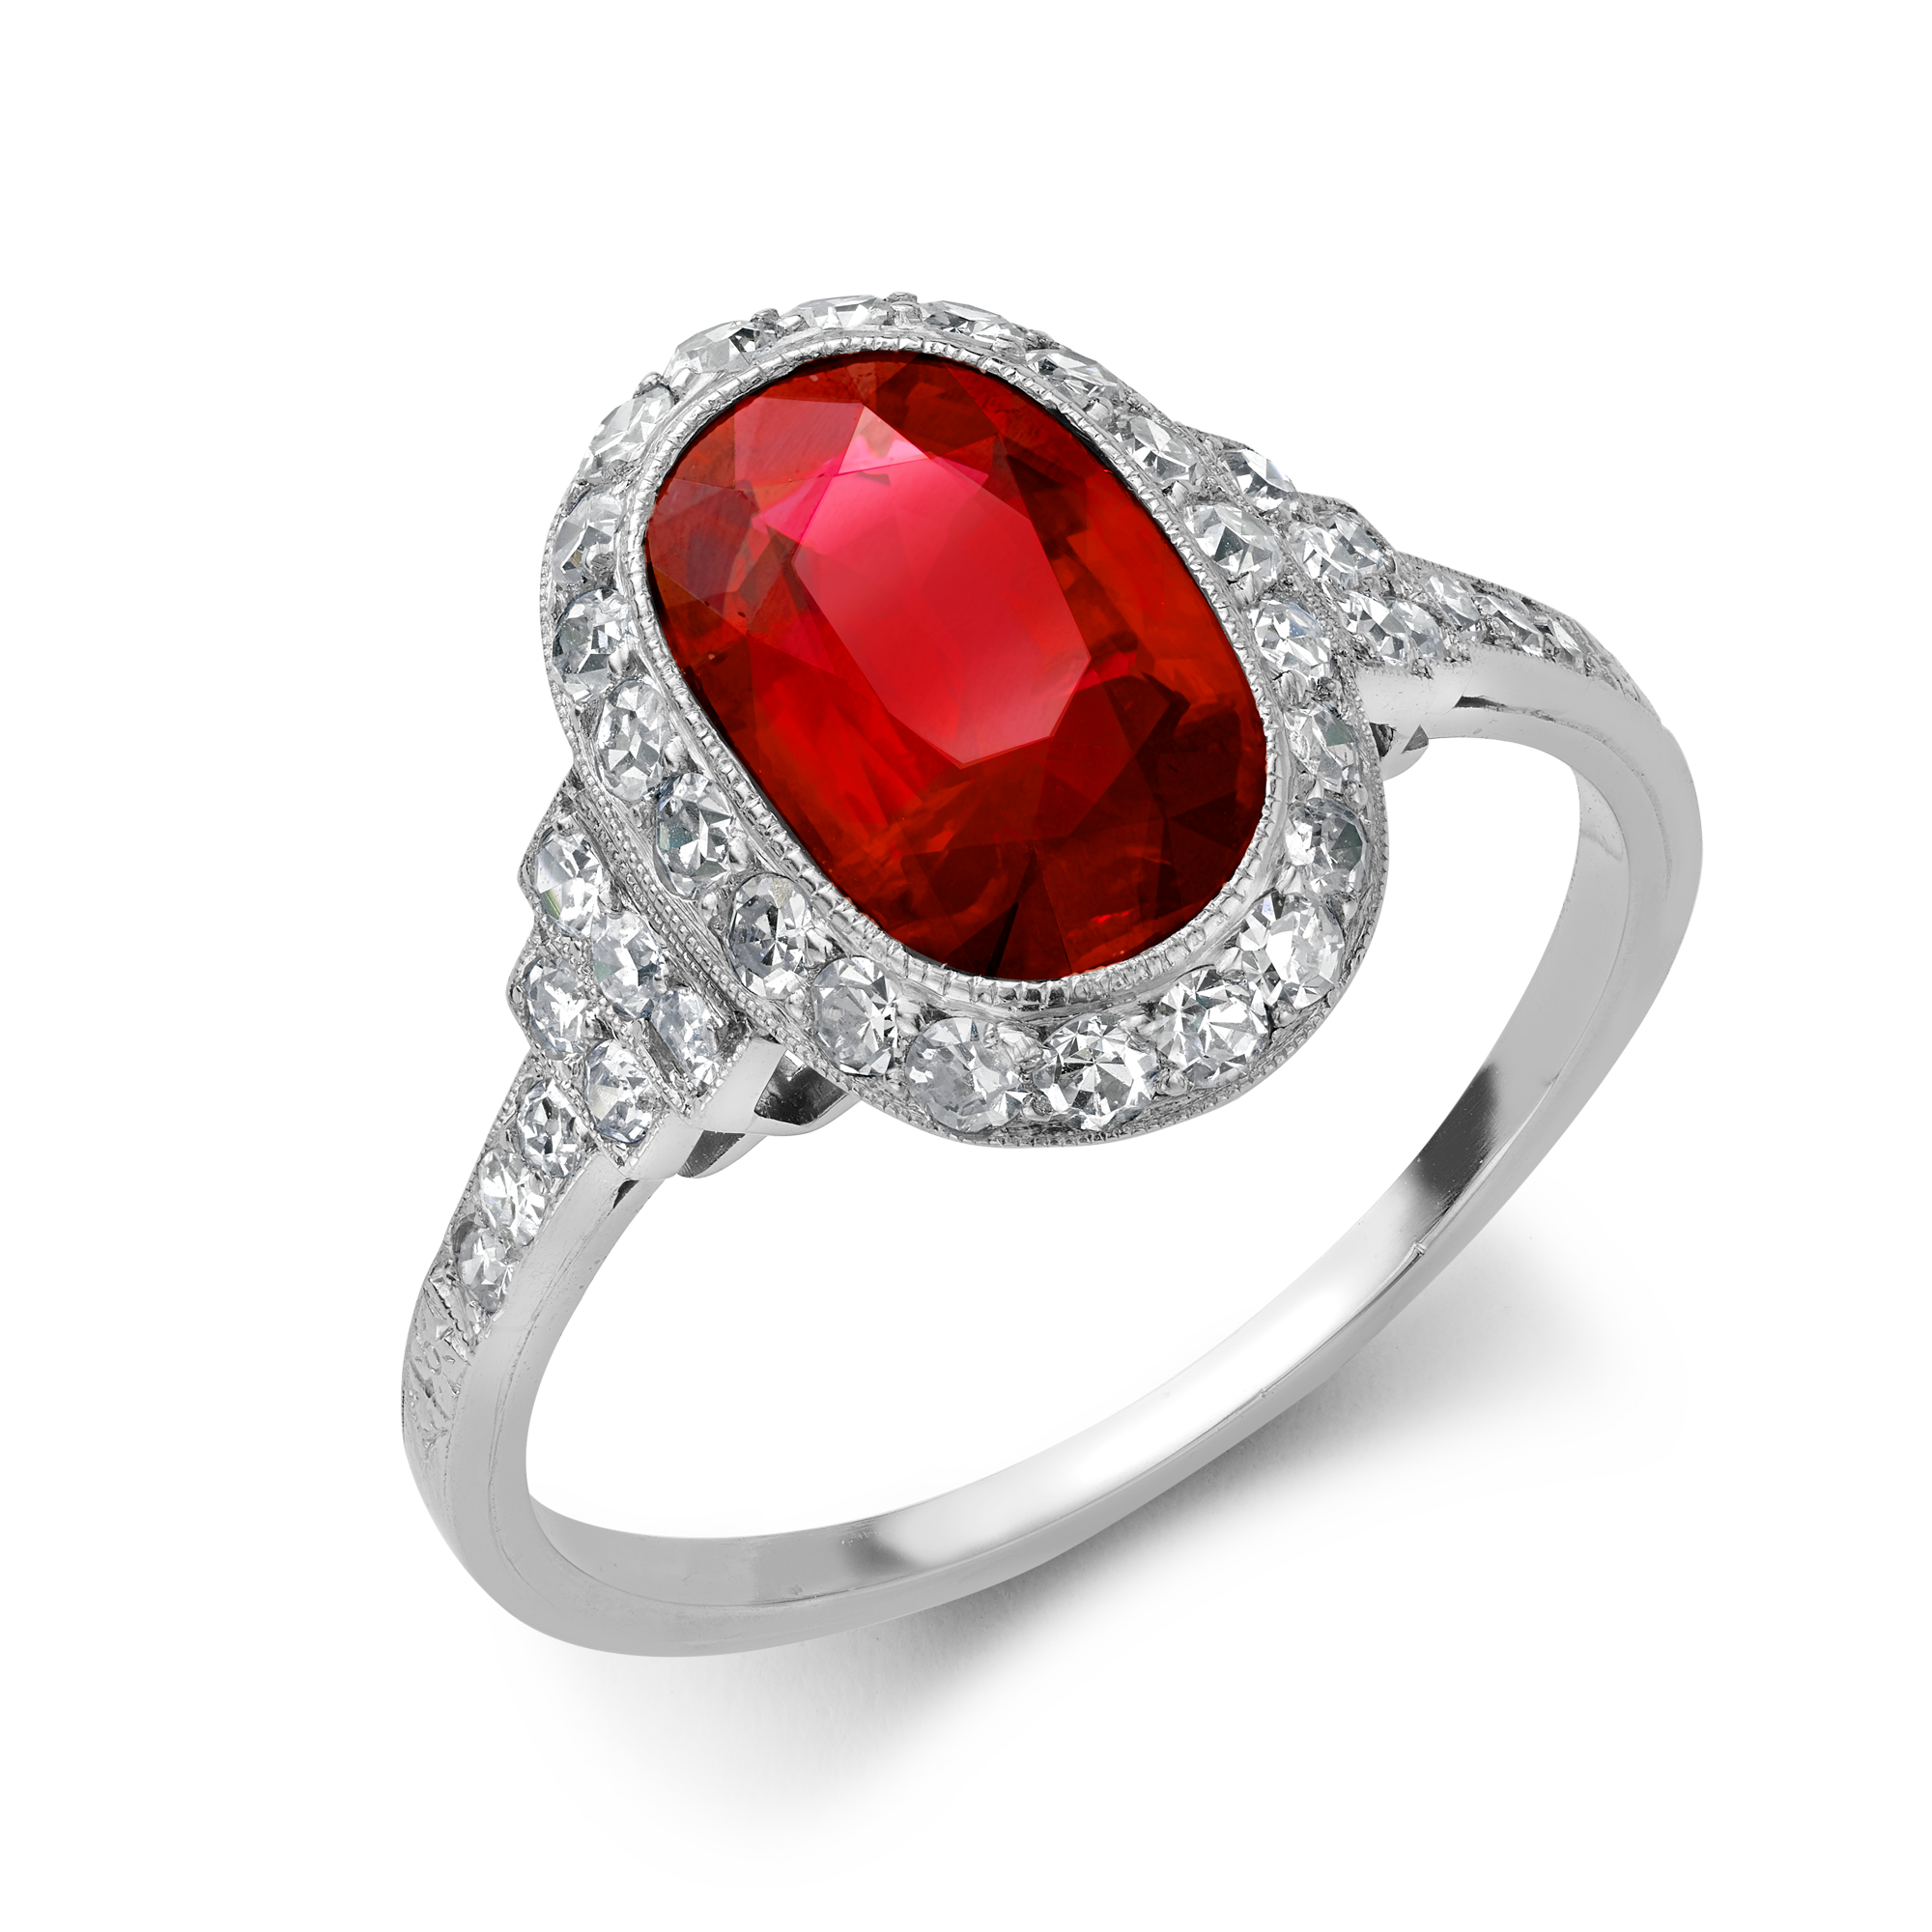 Edwardian 1.87ct Burmese Ruby and Diamond Cluster Ring Oval Cut, Millegrain Set_1